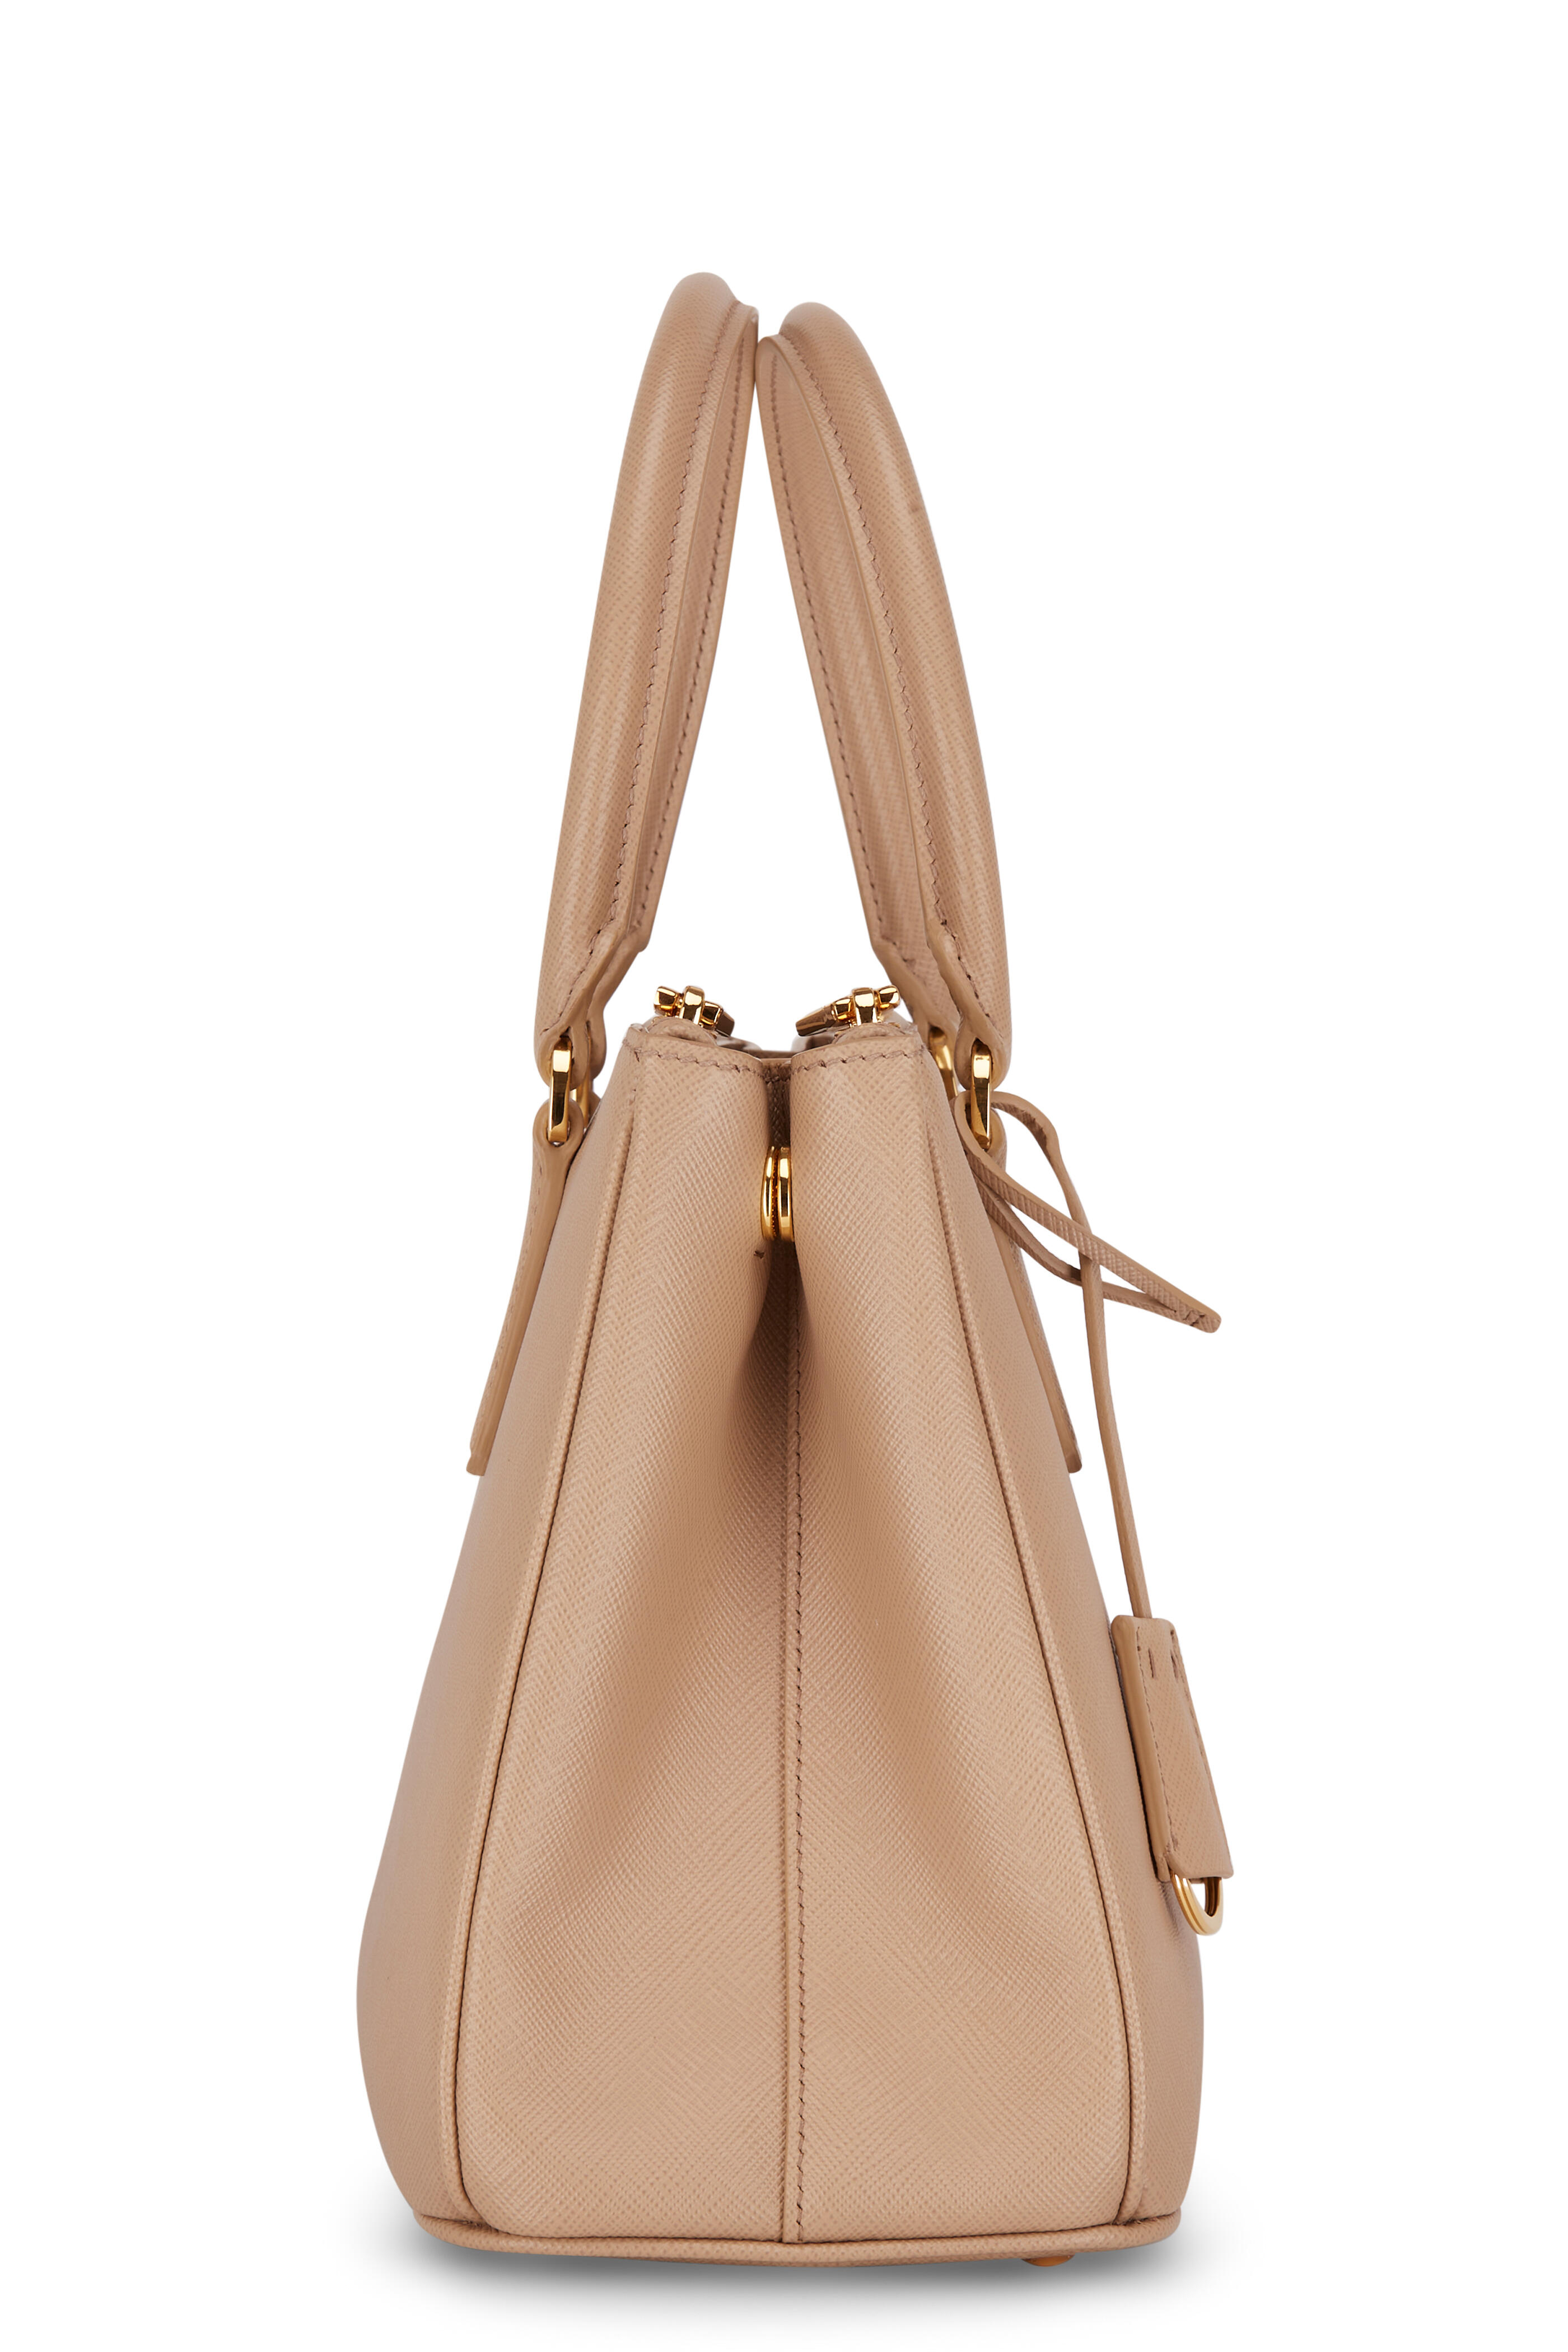 Prada Sand Galleria medium handbag